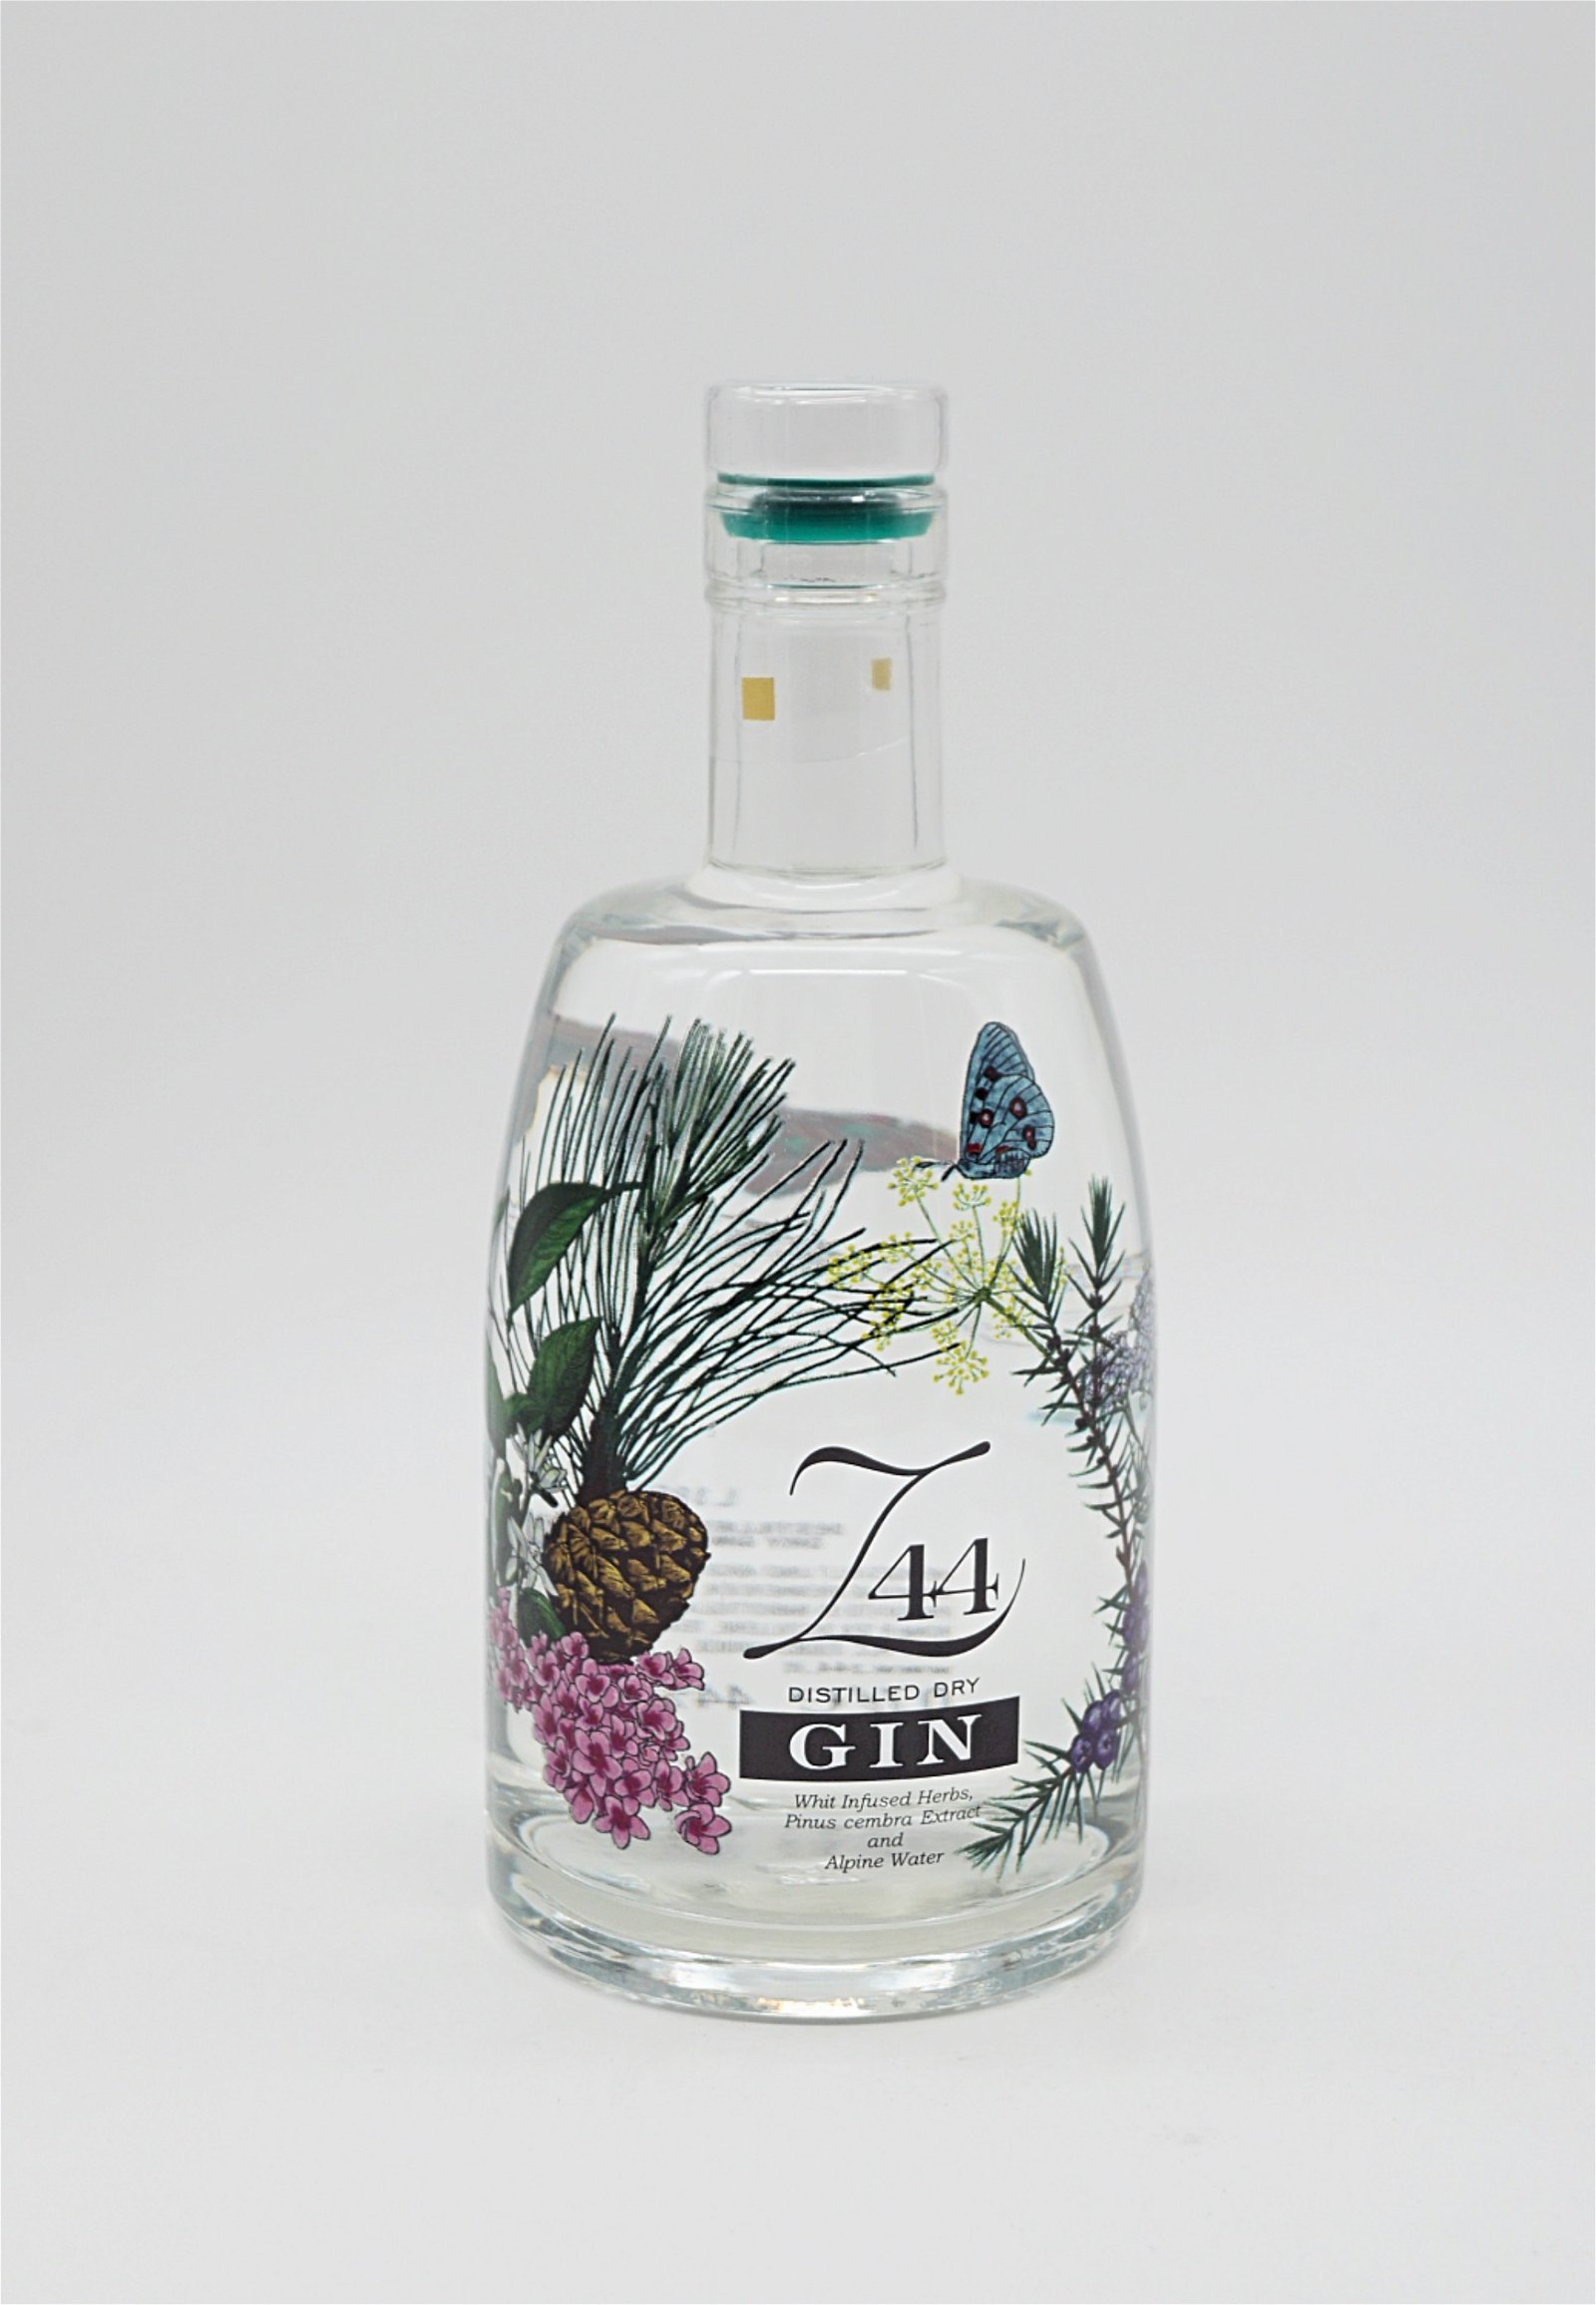 Z44 Dry Gin